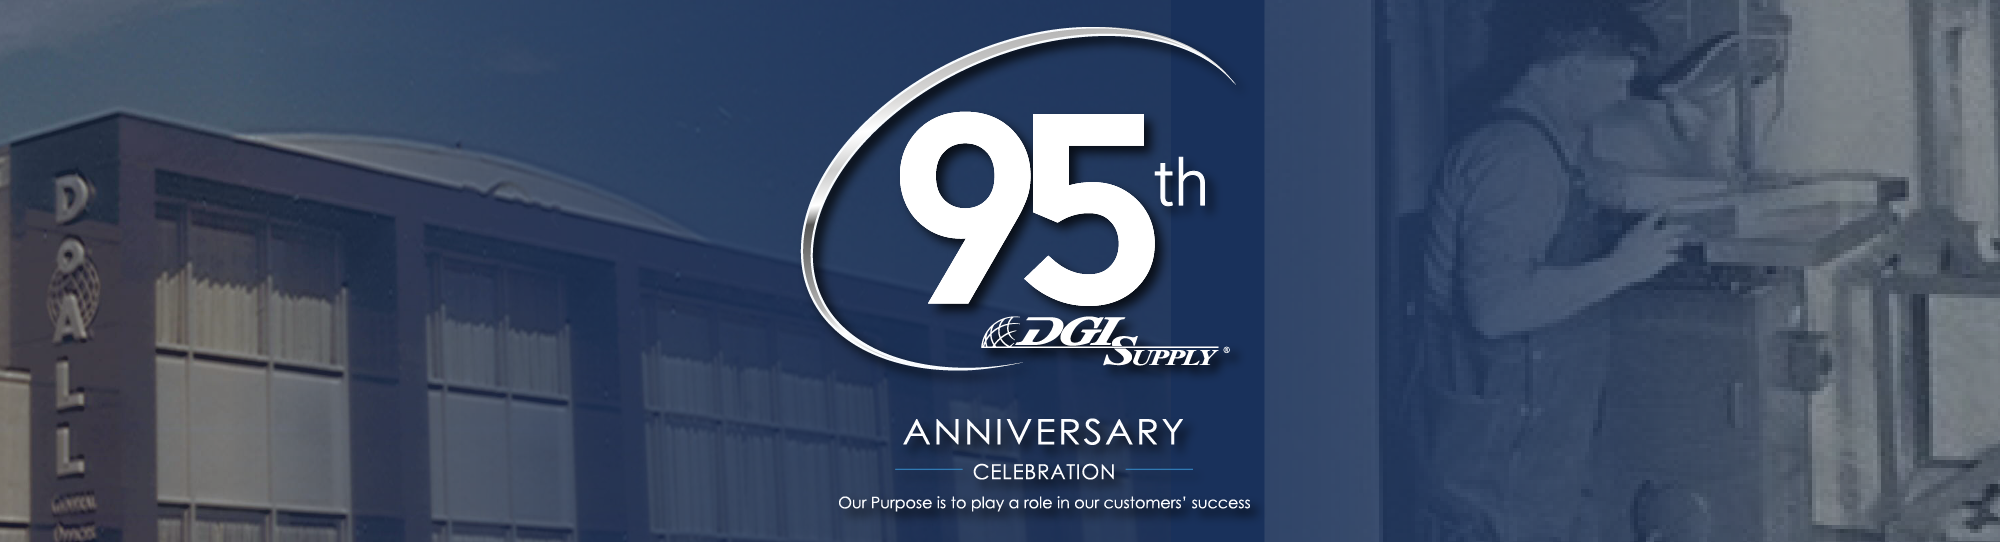 95th Anniversary Celebration